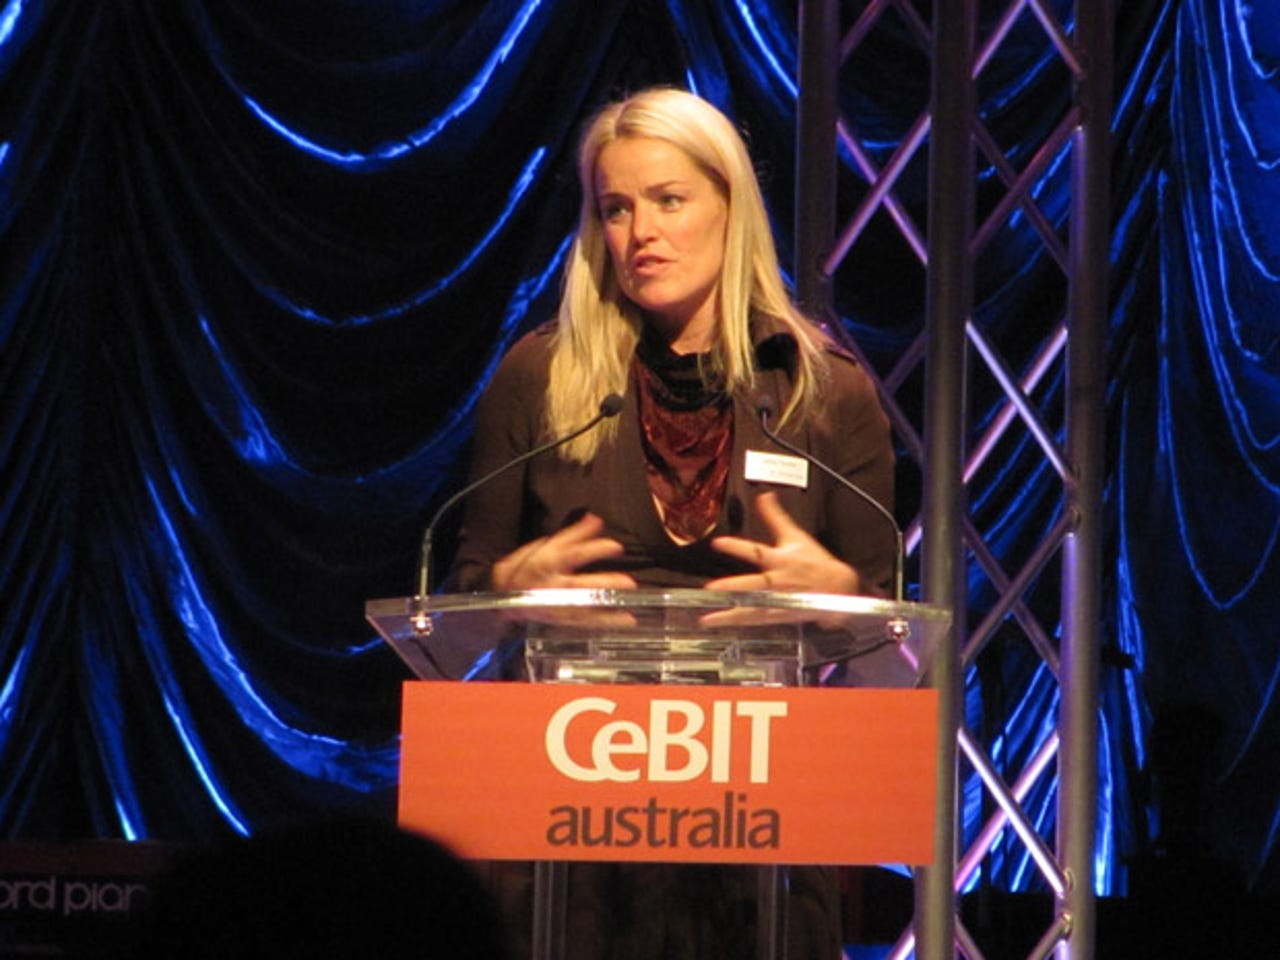 cebit-australia-2011-gala-dinner-photos8.jpg